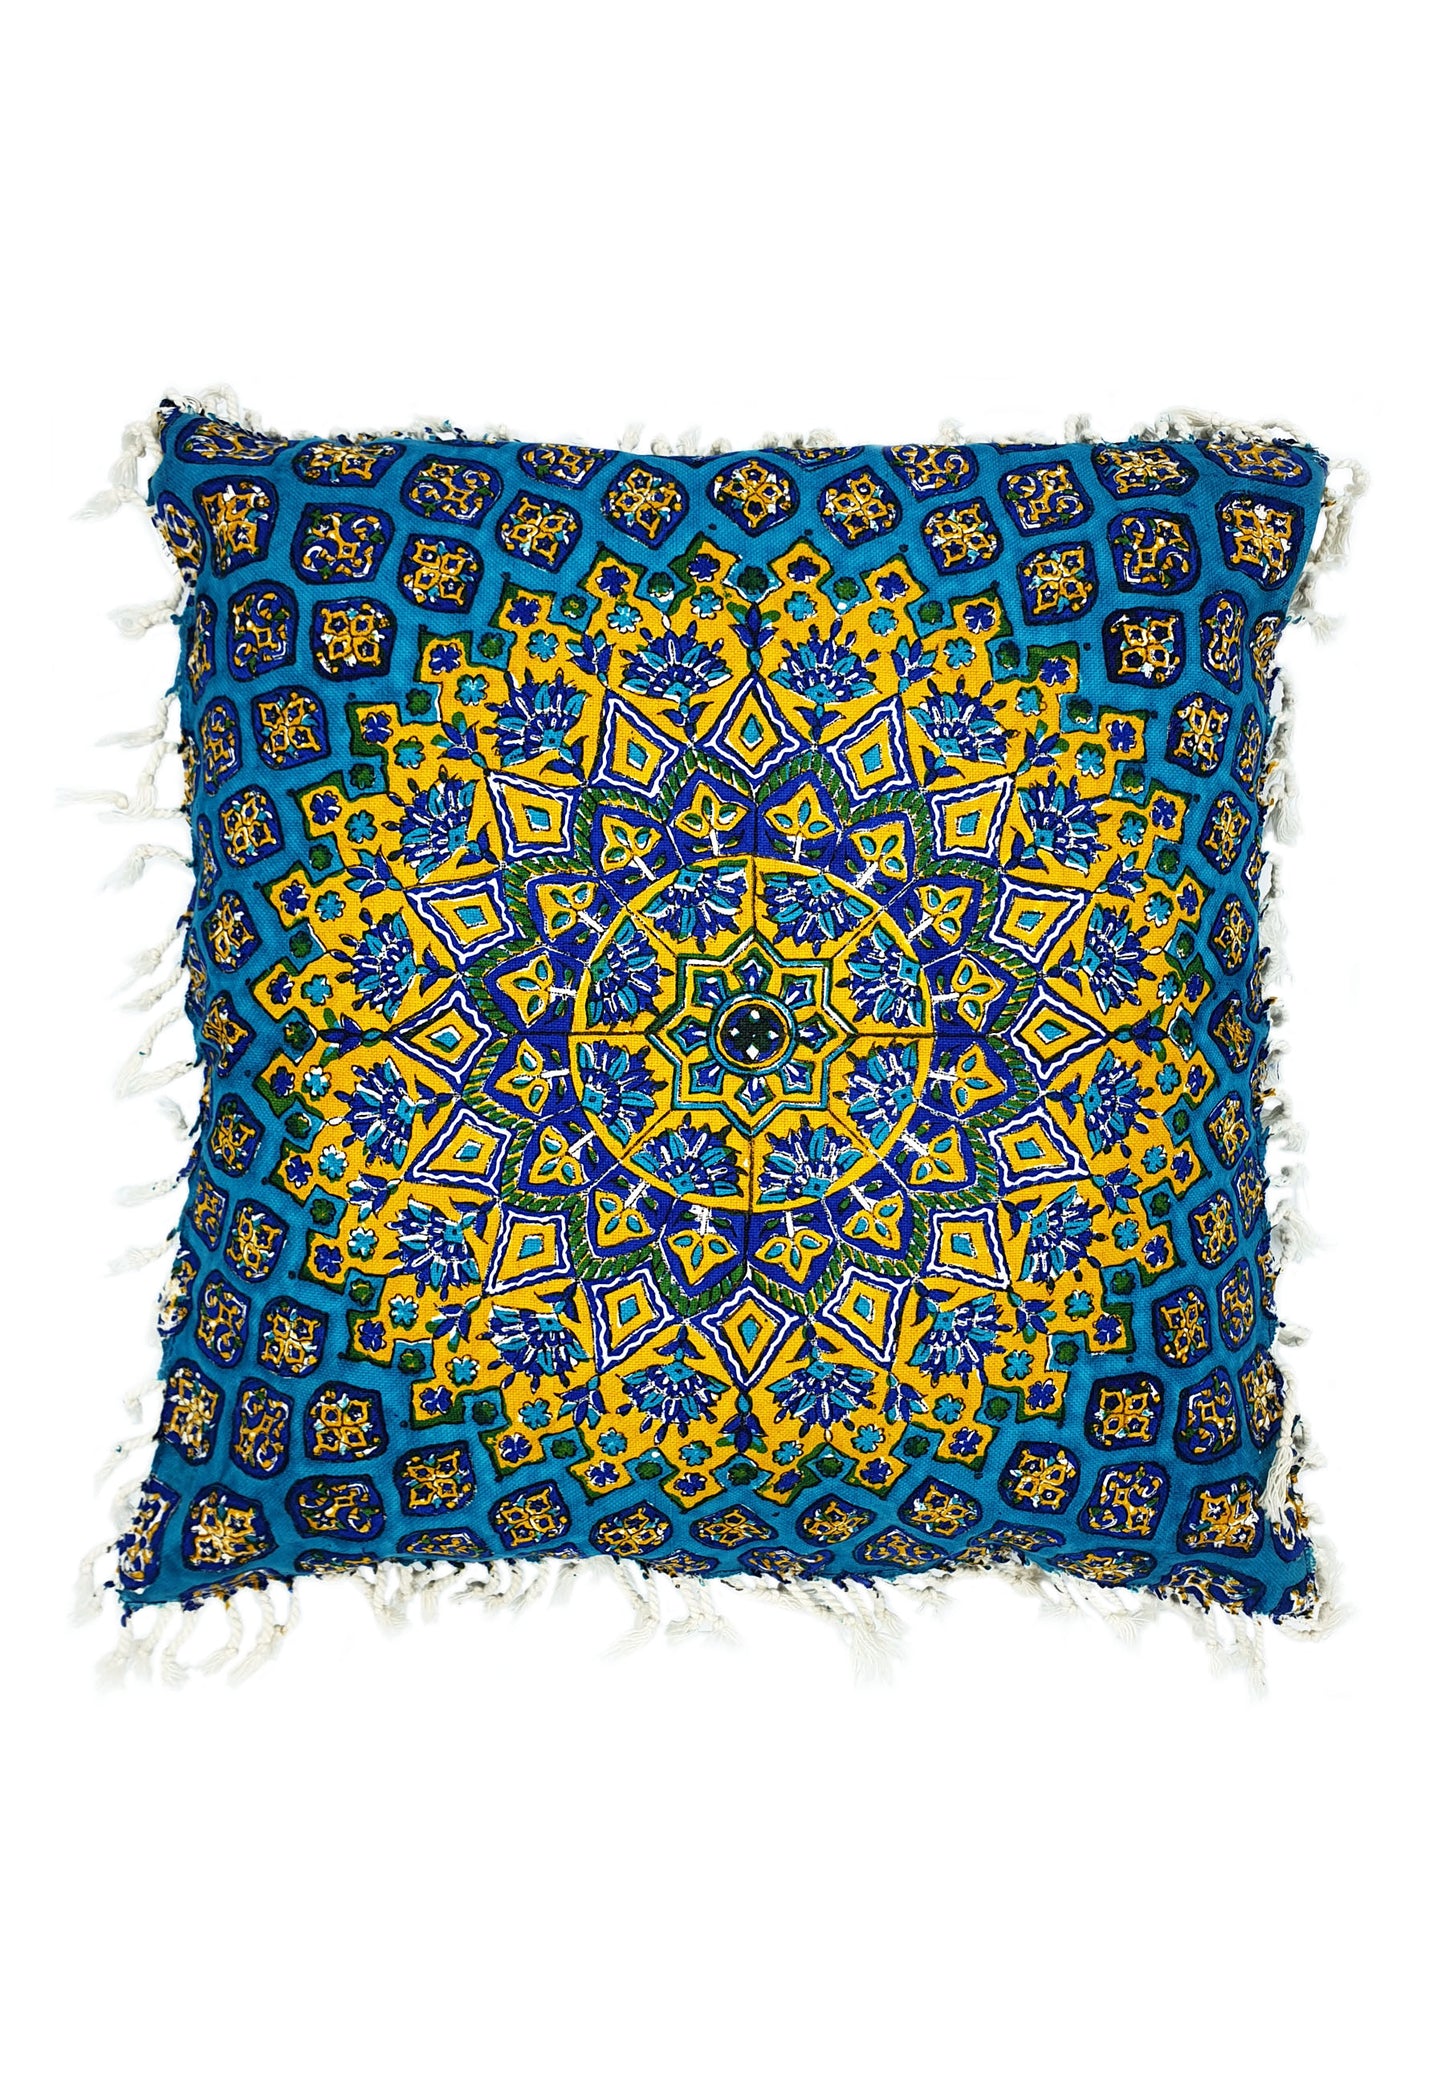 AFROZAN Hand-printed Cushion Cover - Peisly Isfahan